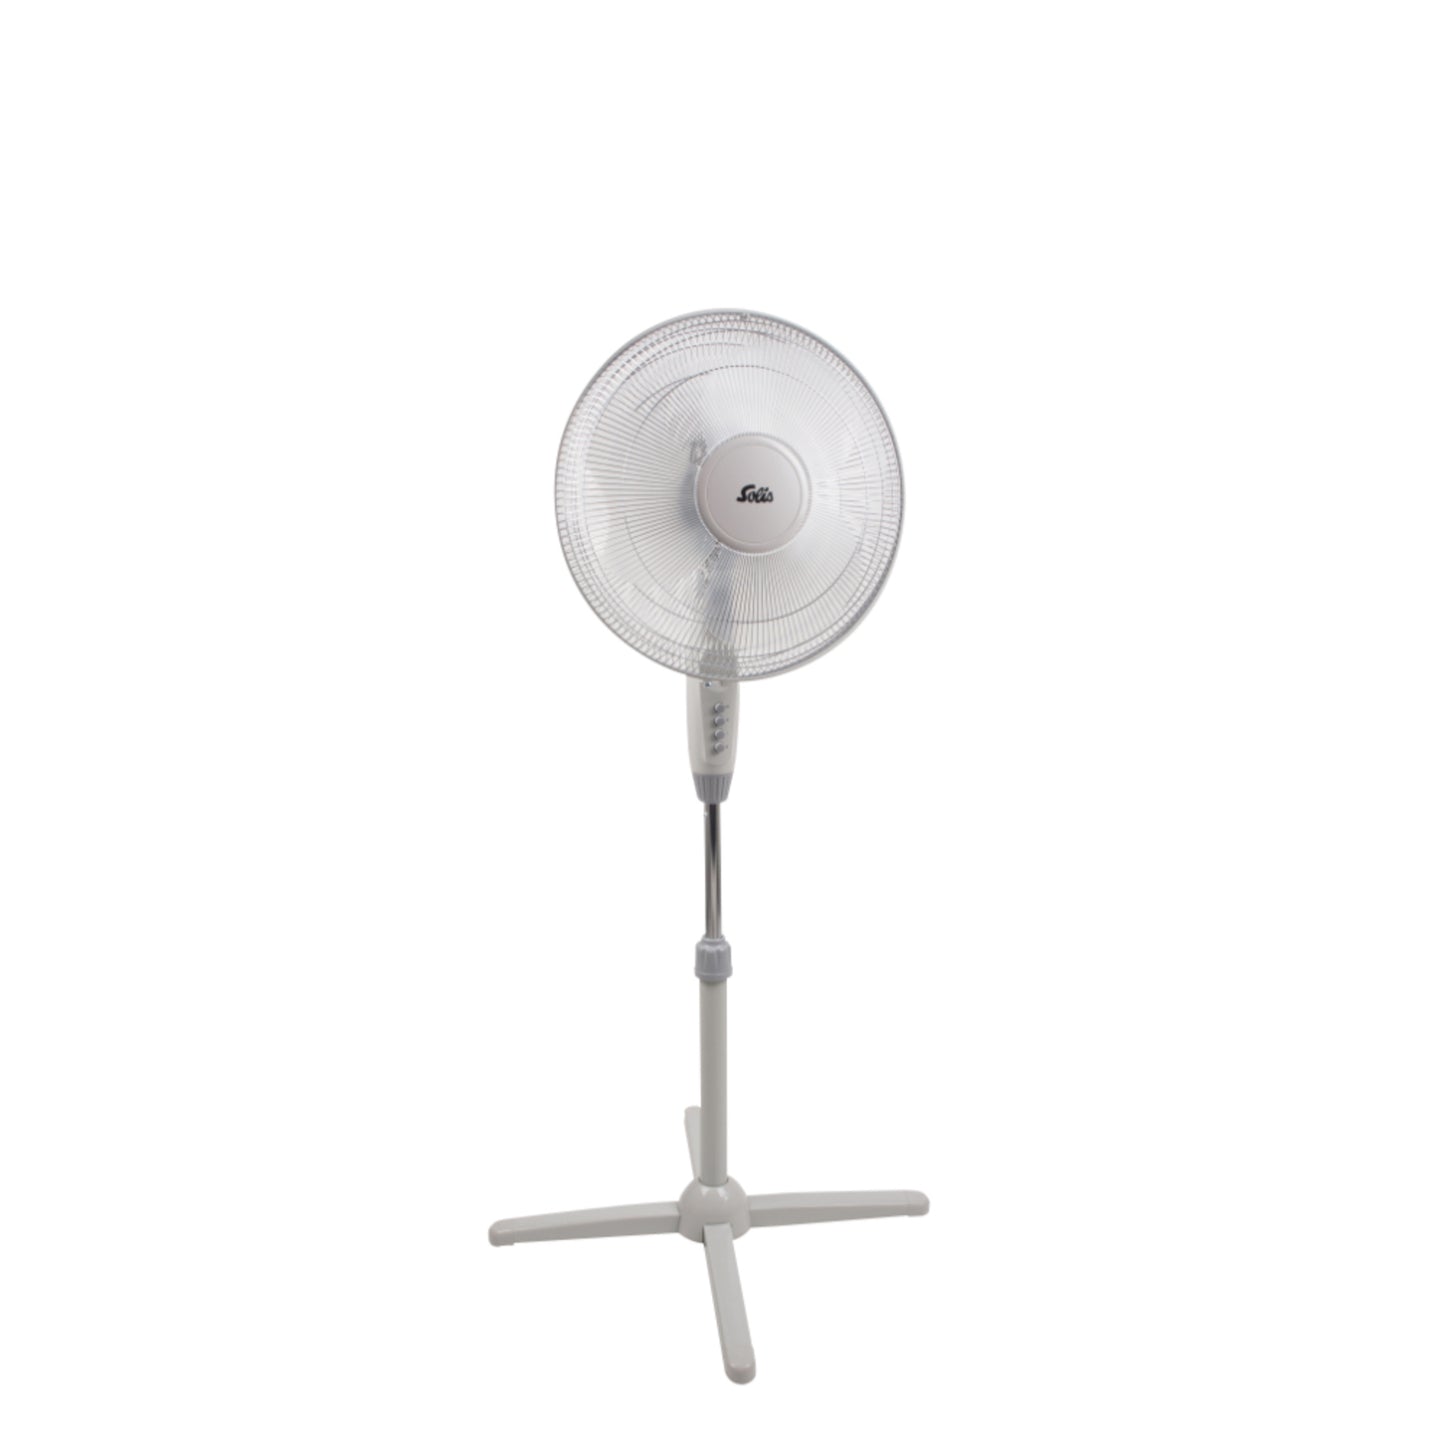 Solis Stand Ventilator Fan